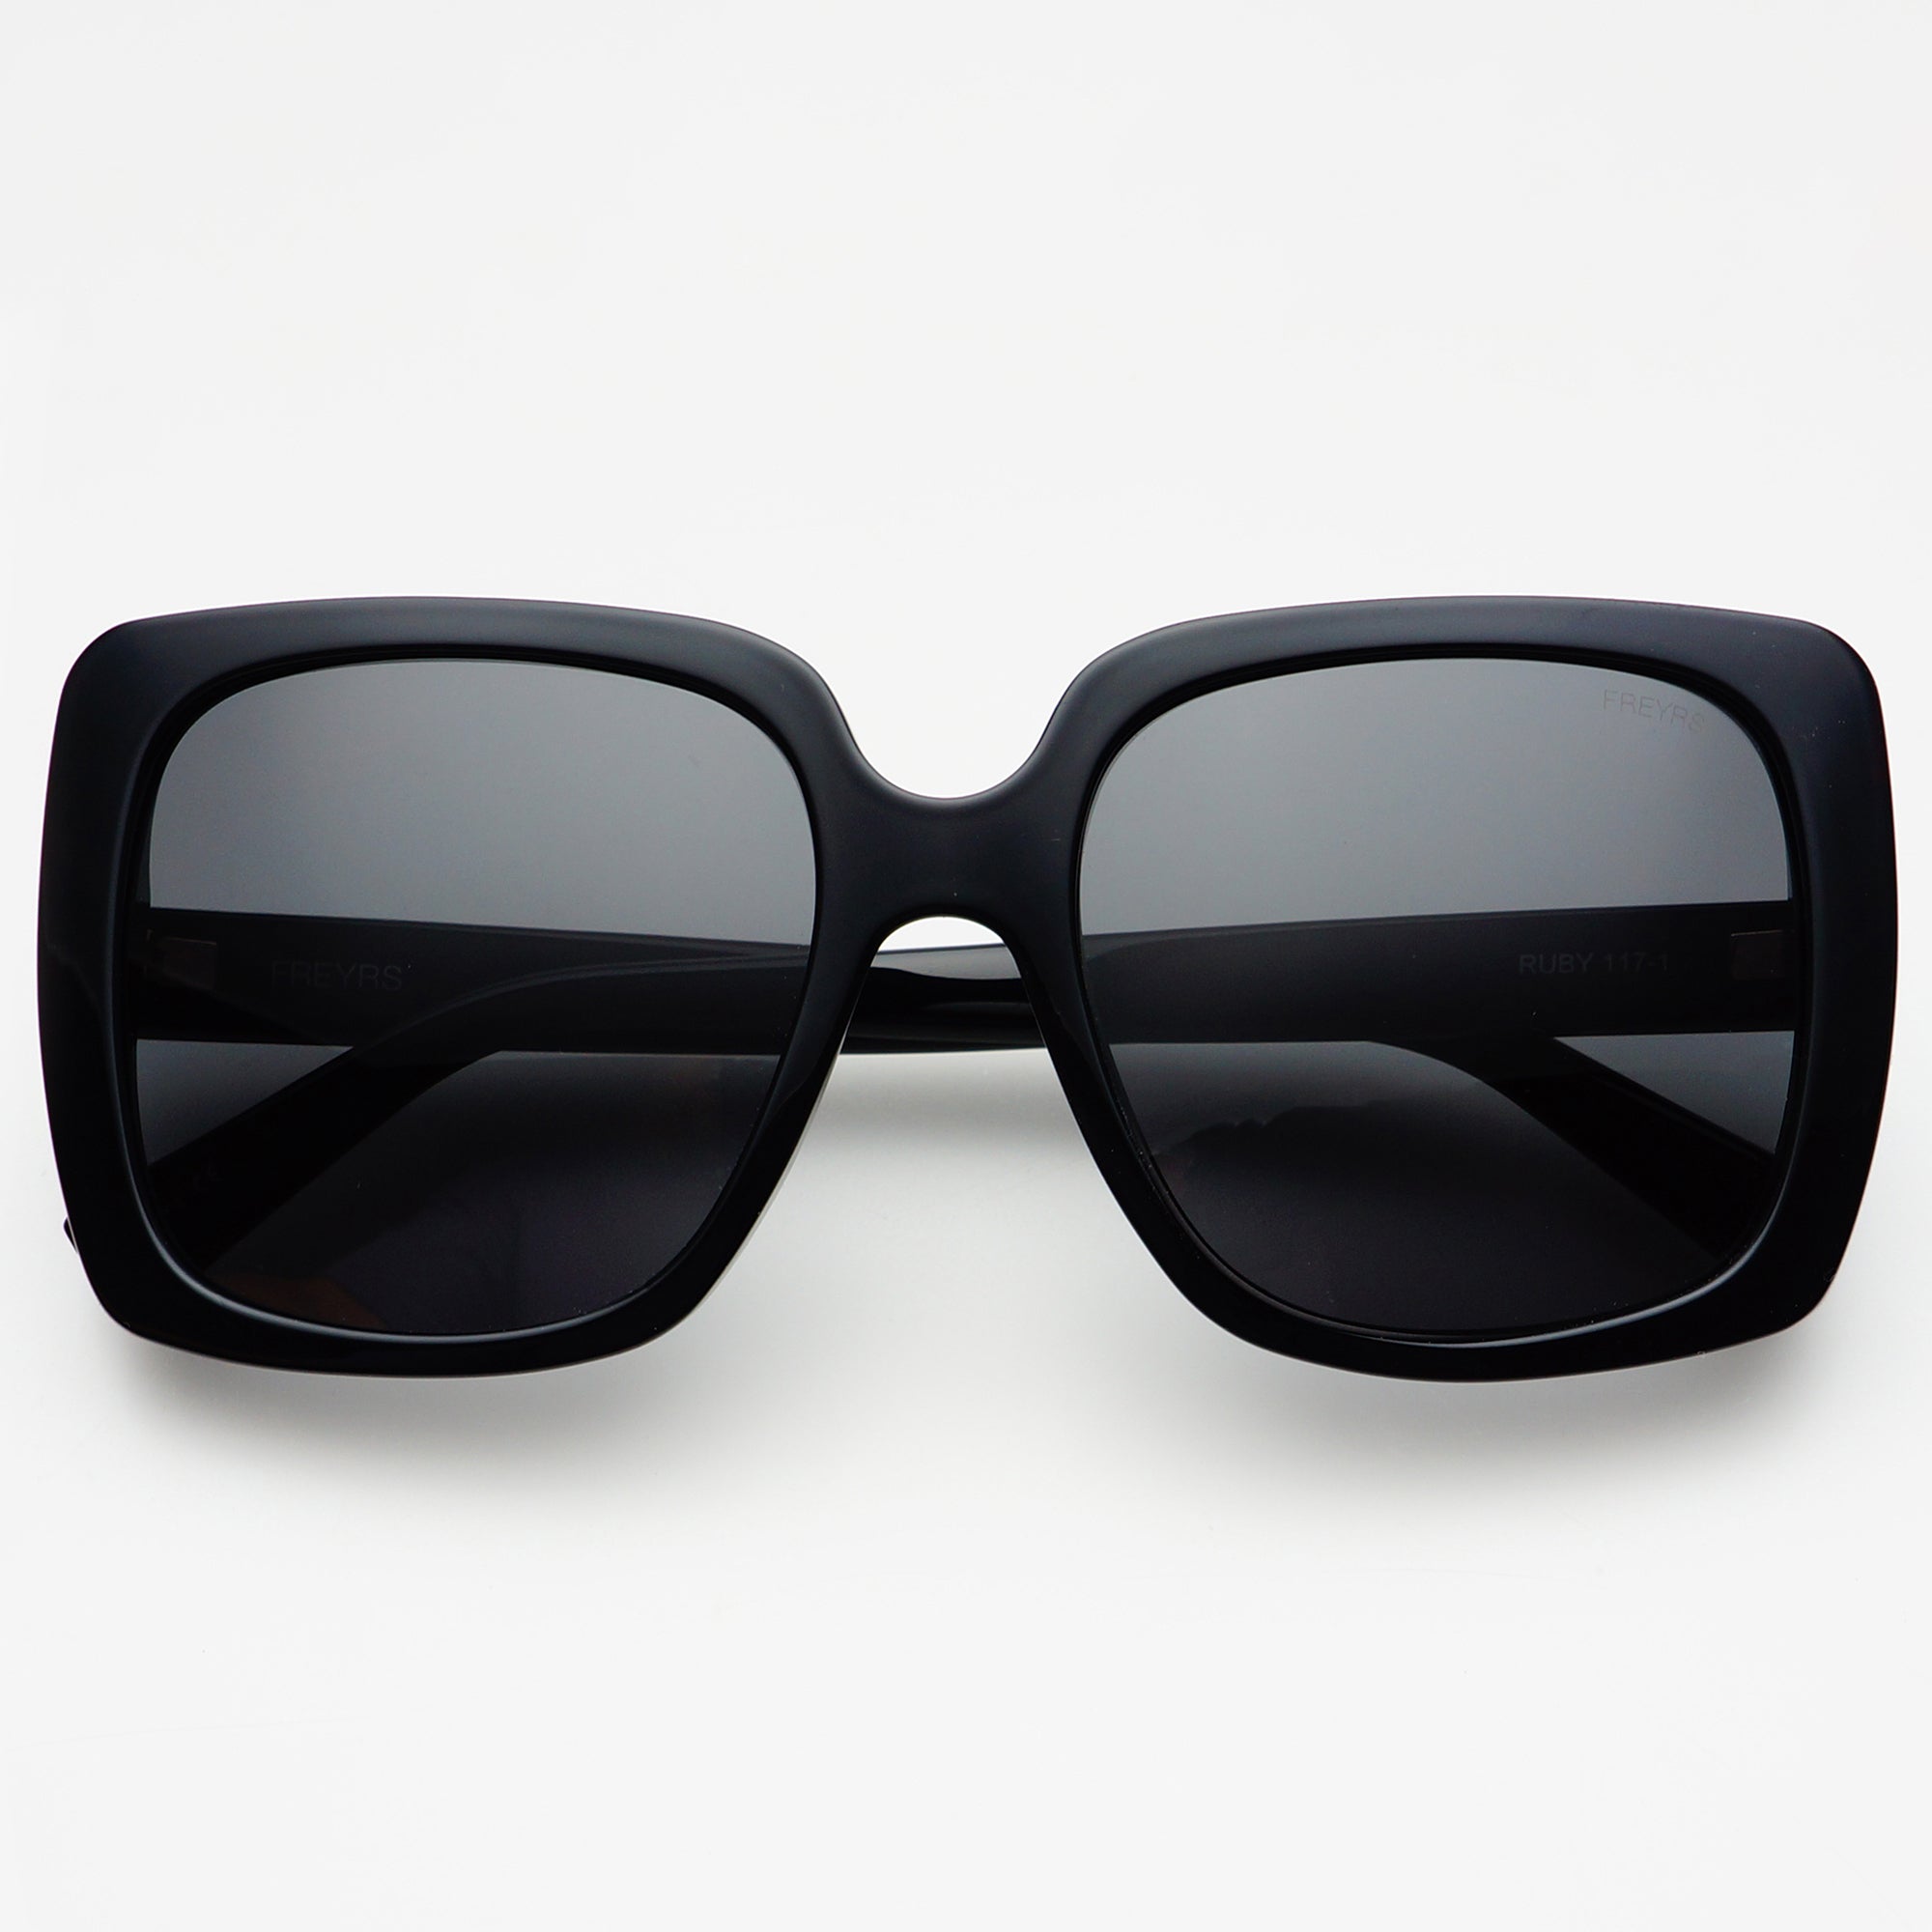 Giorgio Armani Eyewear - All About Vision